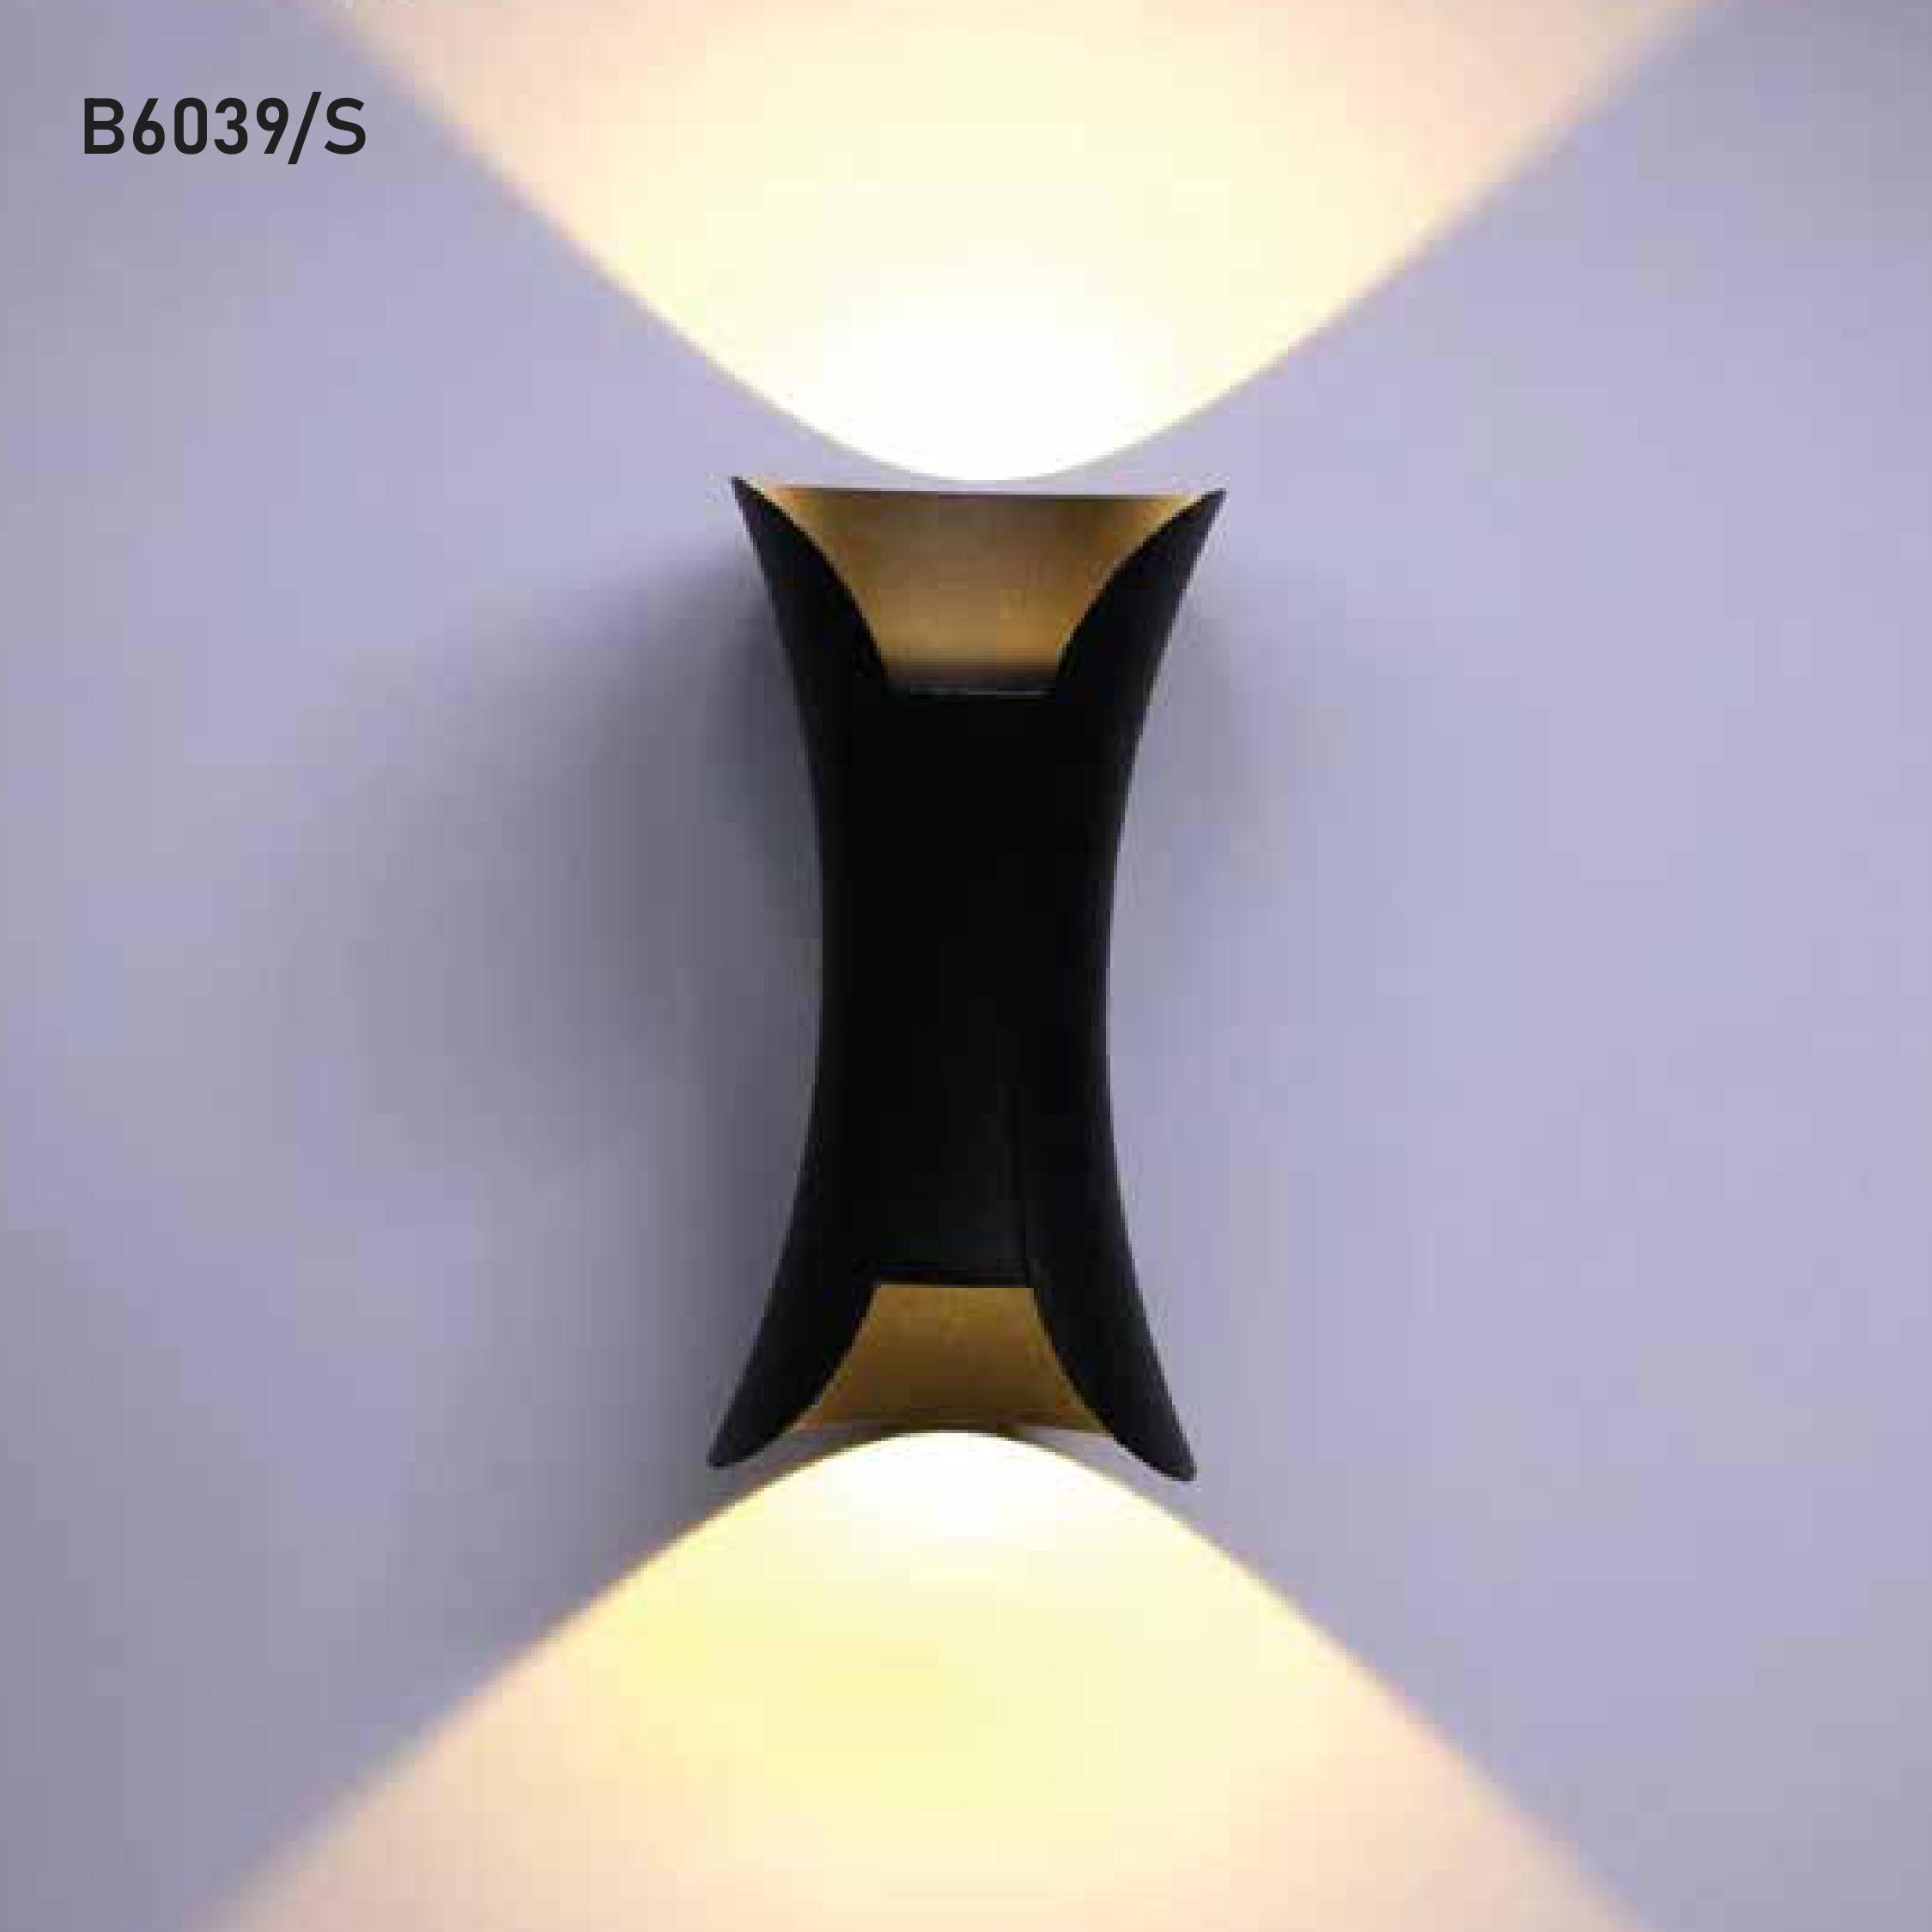 LED Outdoor Wall Light | B6039/S-2w-Black